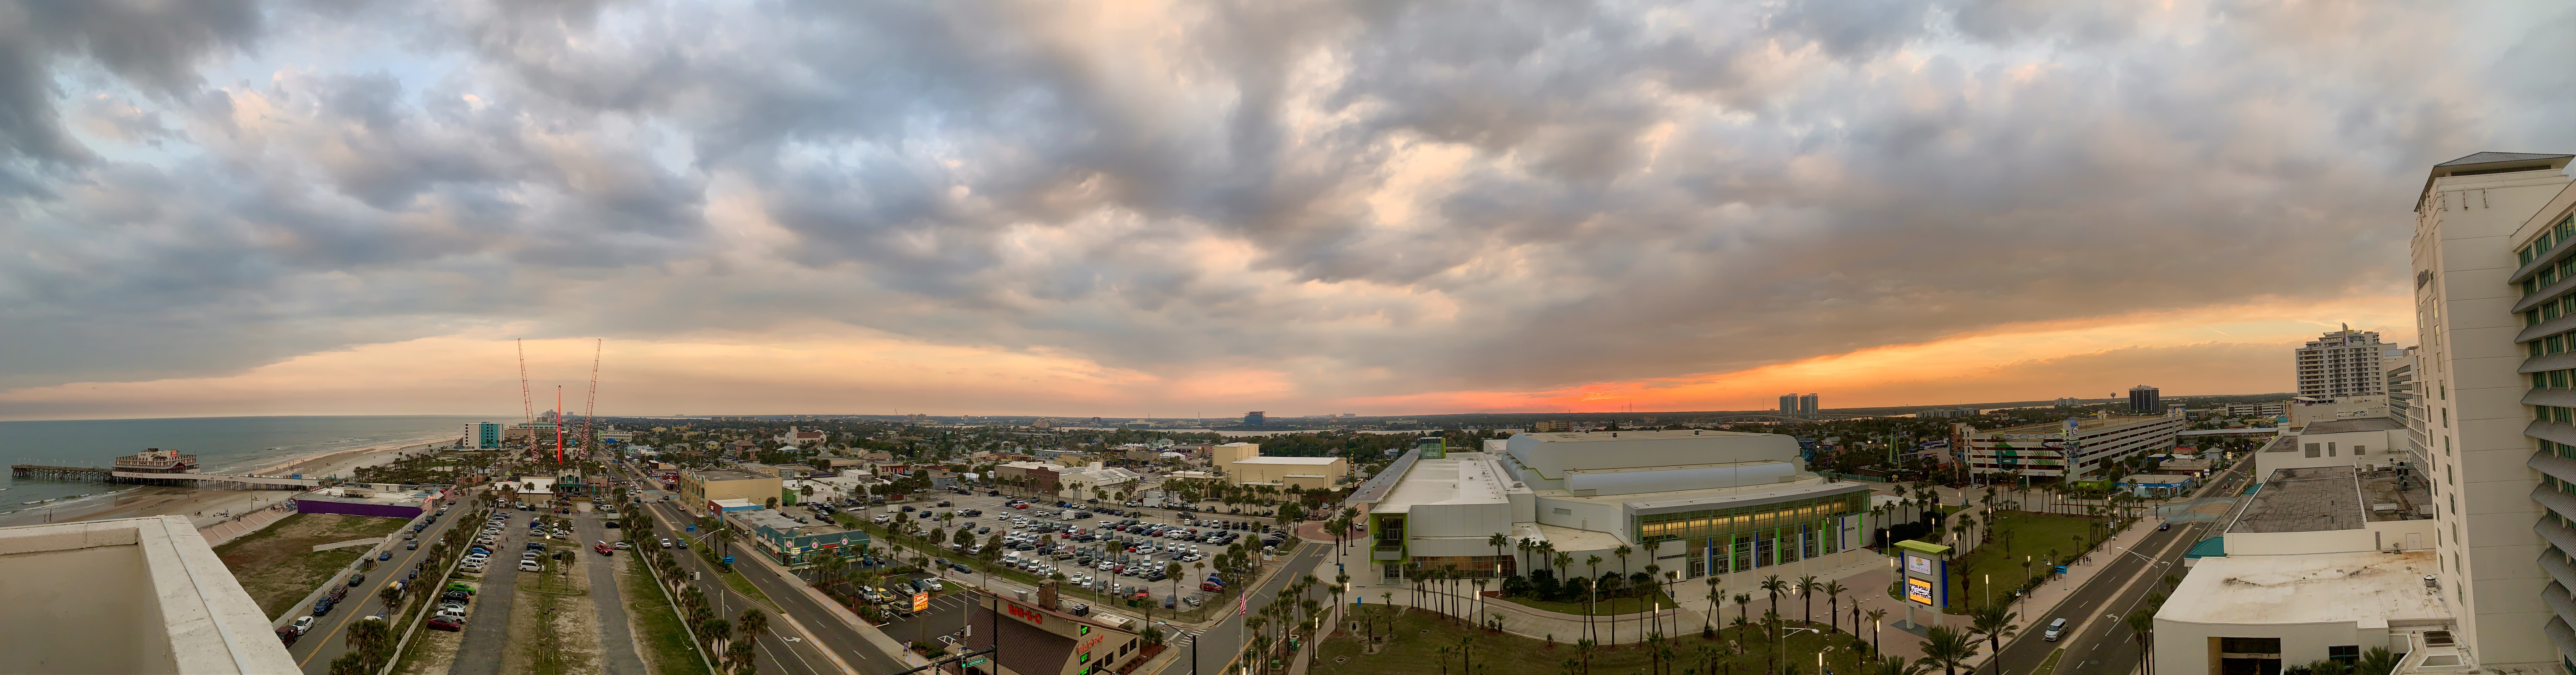 A panoramic view of Daytona Beach from atop the Hilton hotel at Daytona Bike Week 2020.